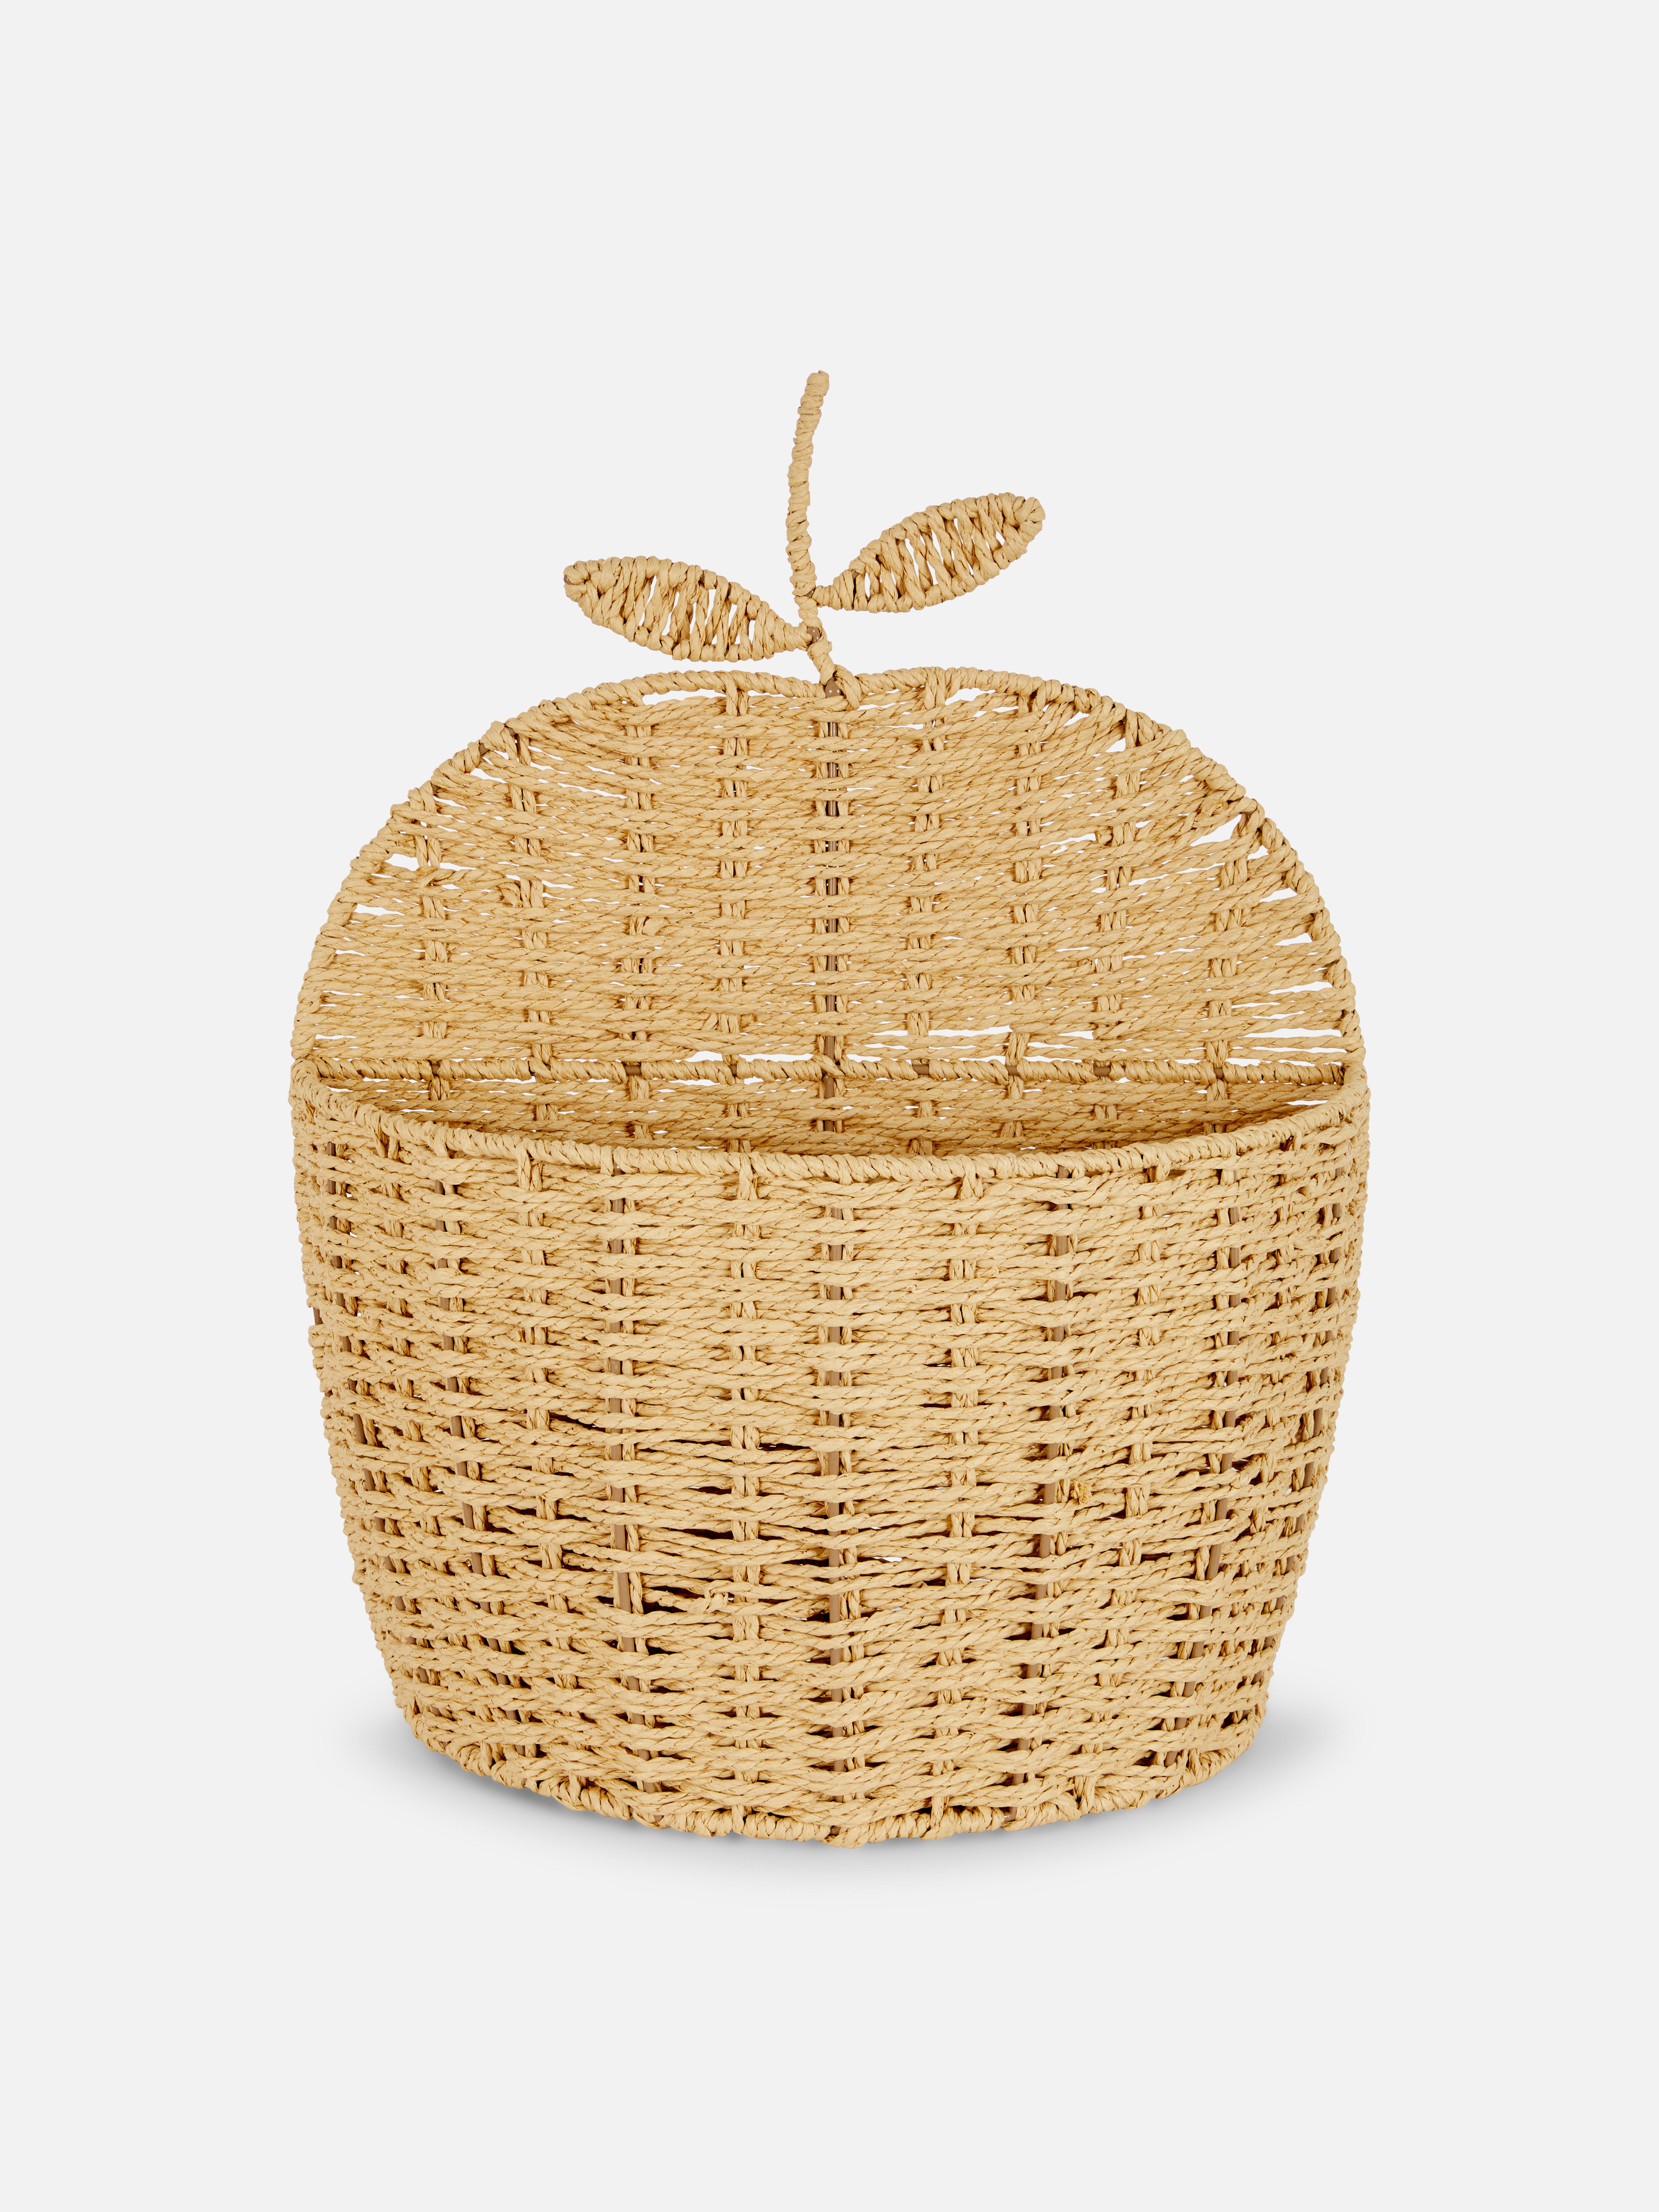 Apple Wall Basket